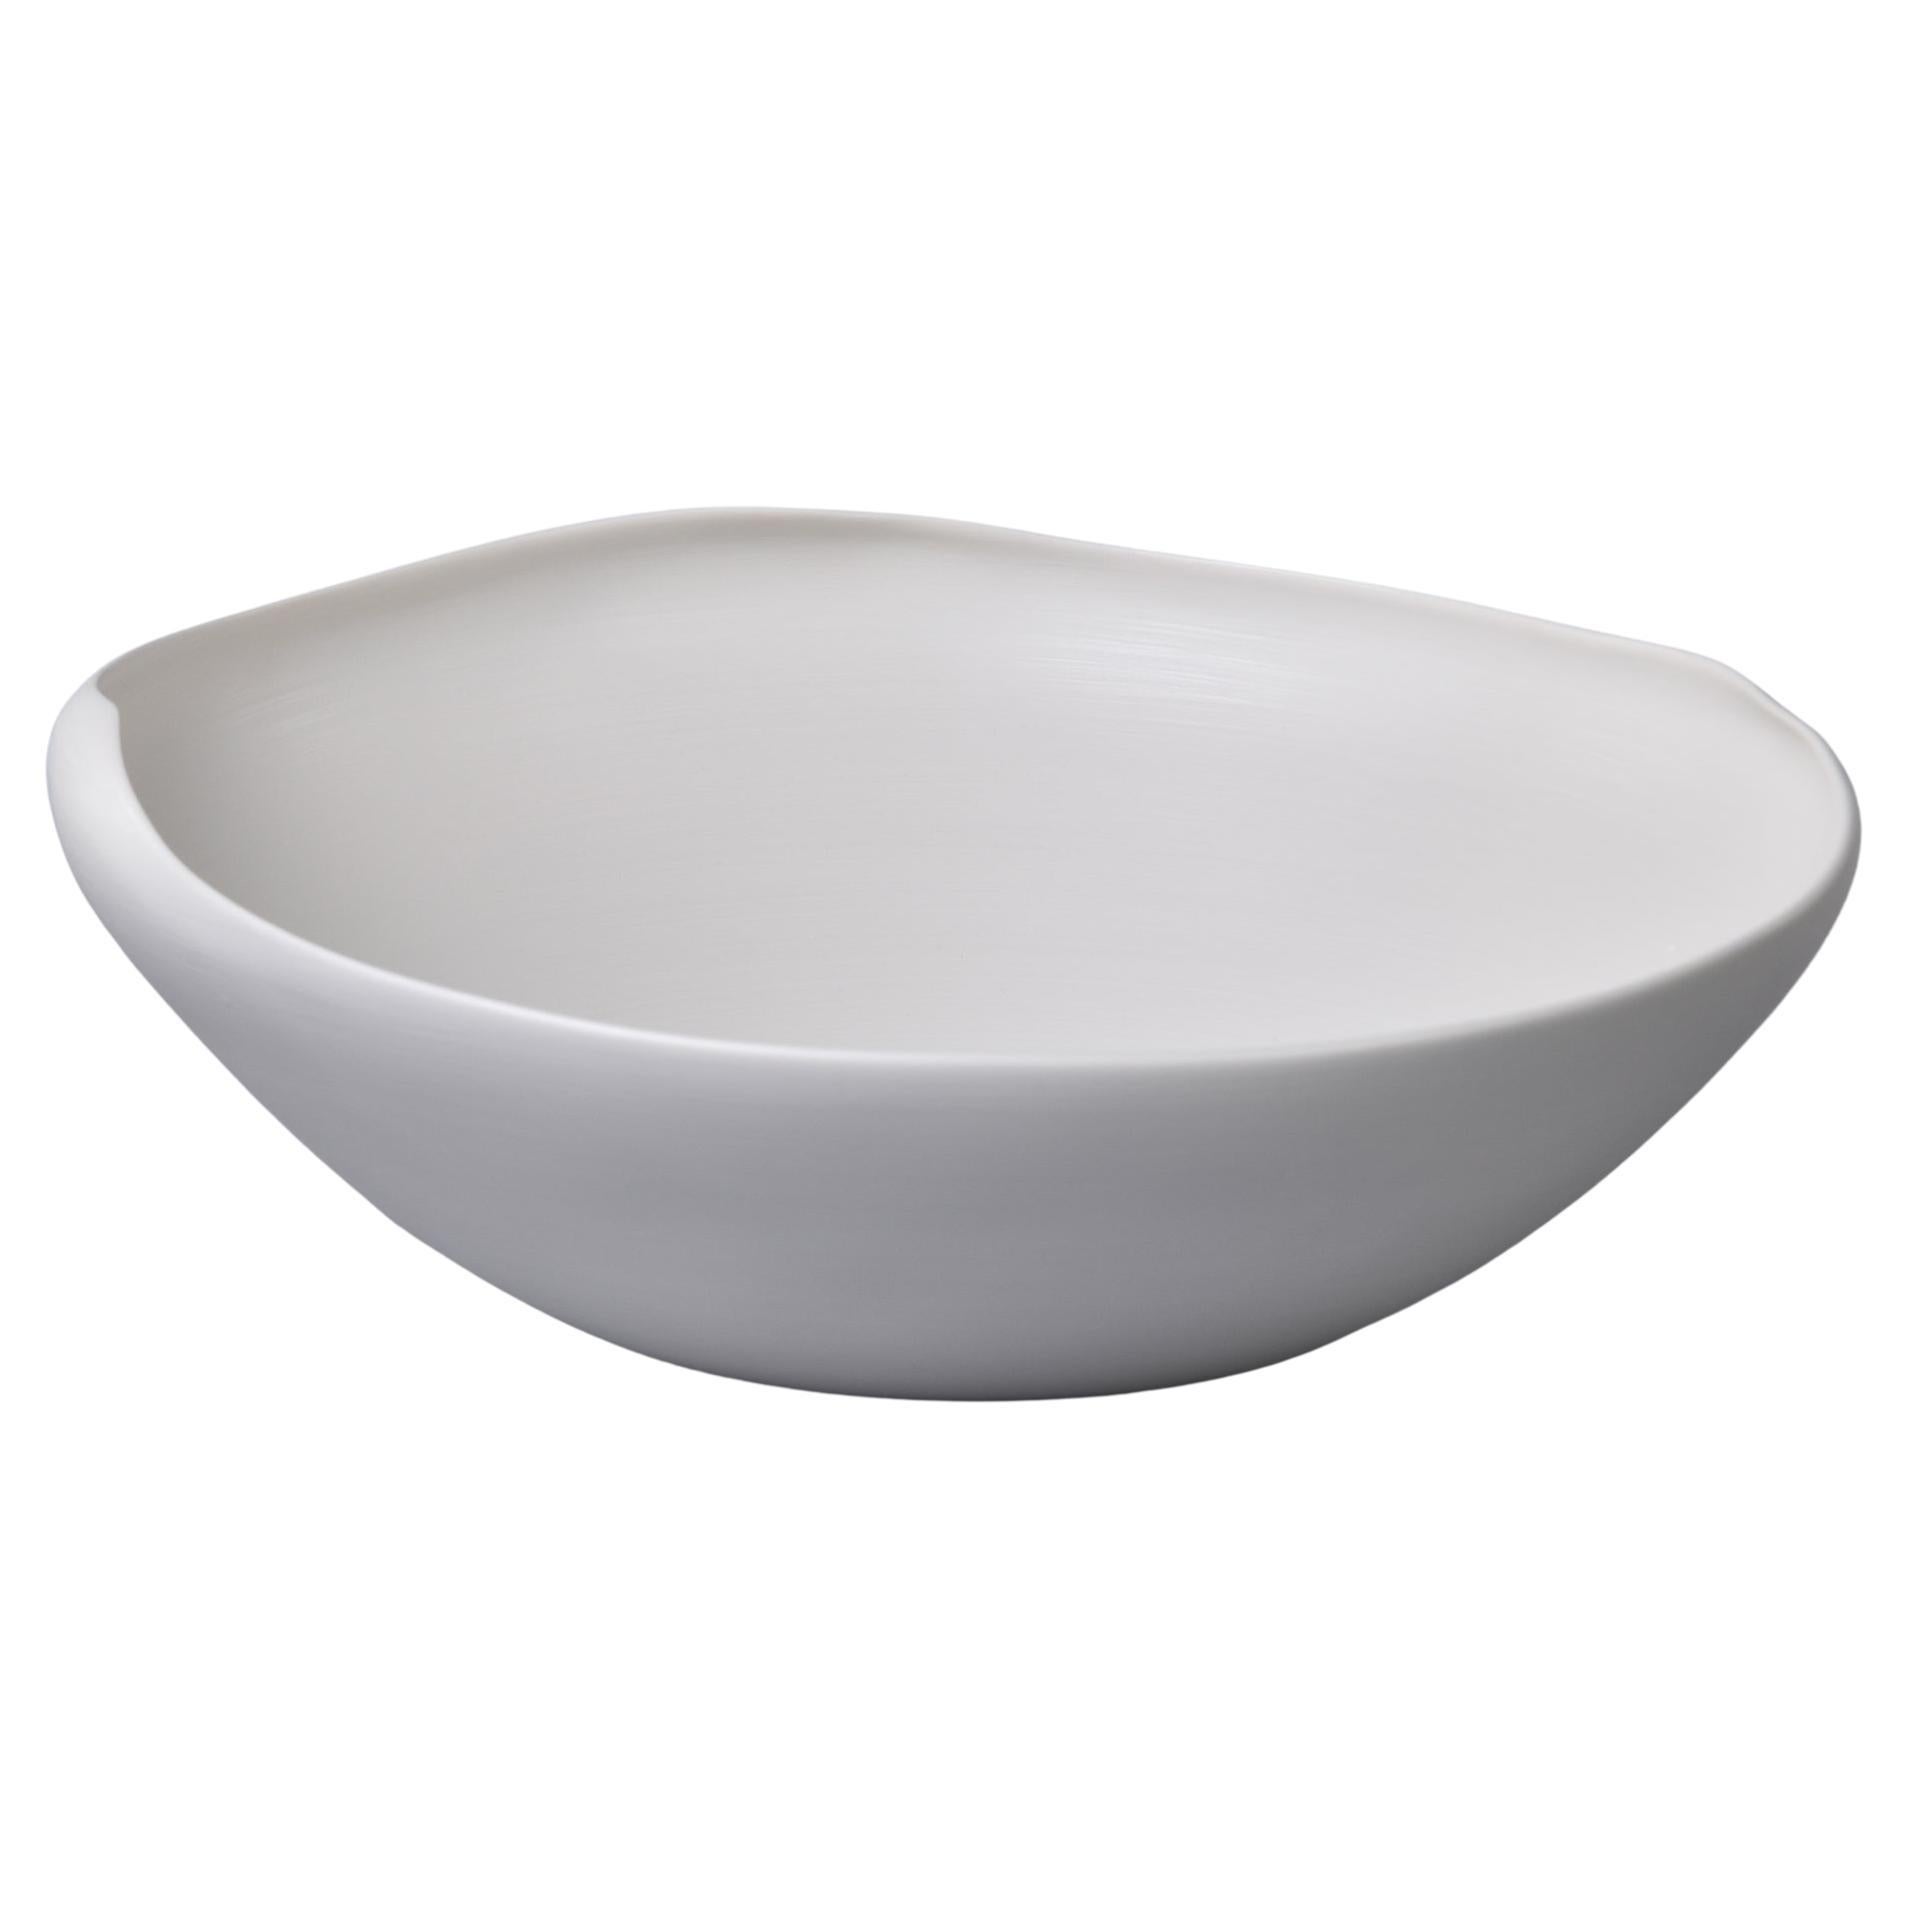 New Rina Menardi Medium Conchiglia Bowl in Linen Glaze For Sale